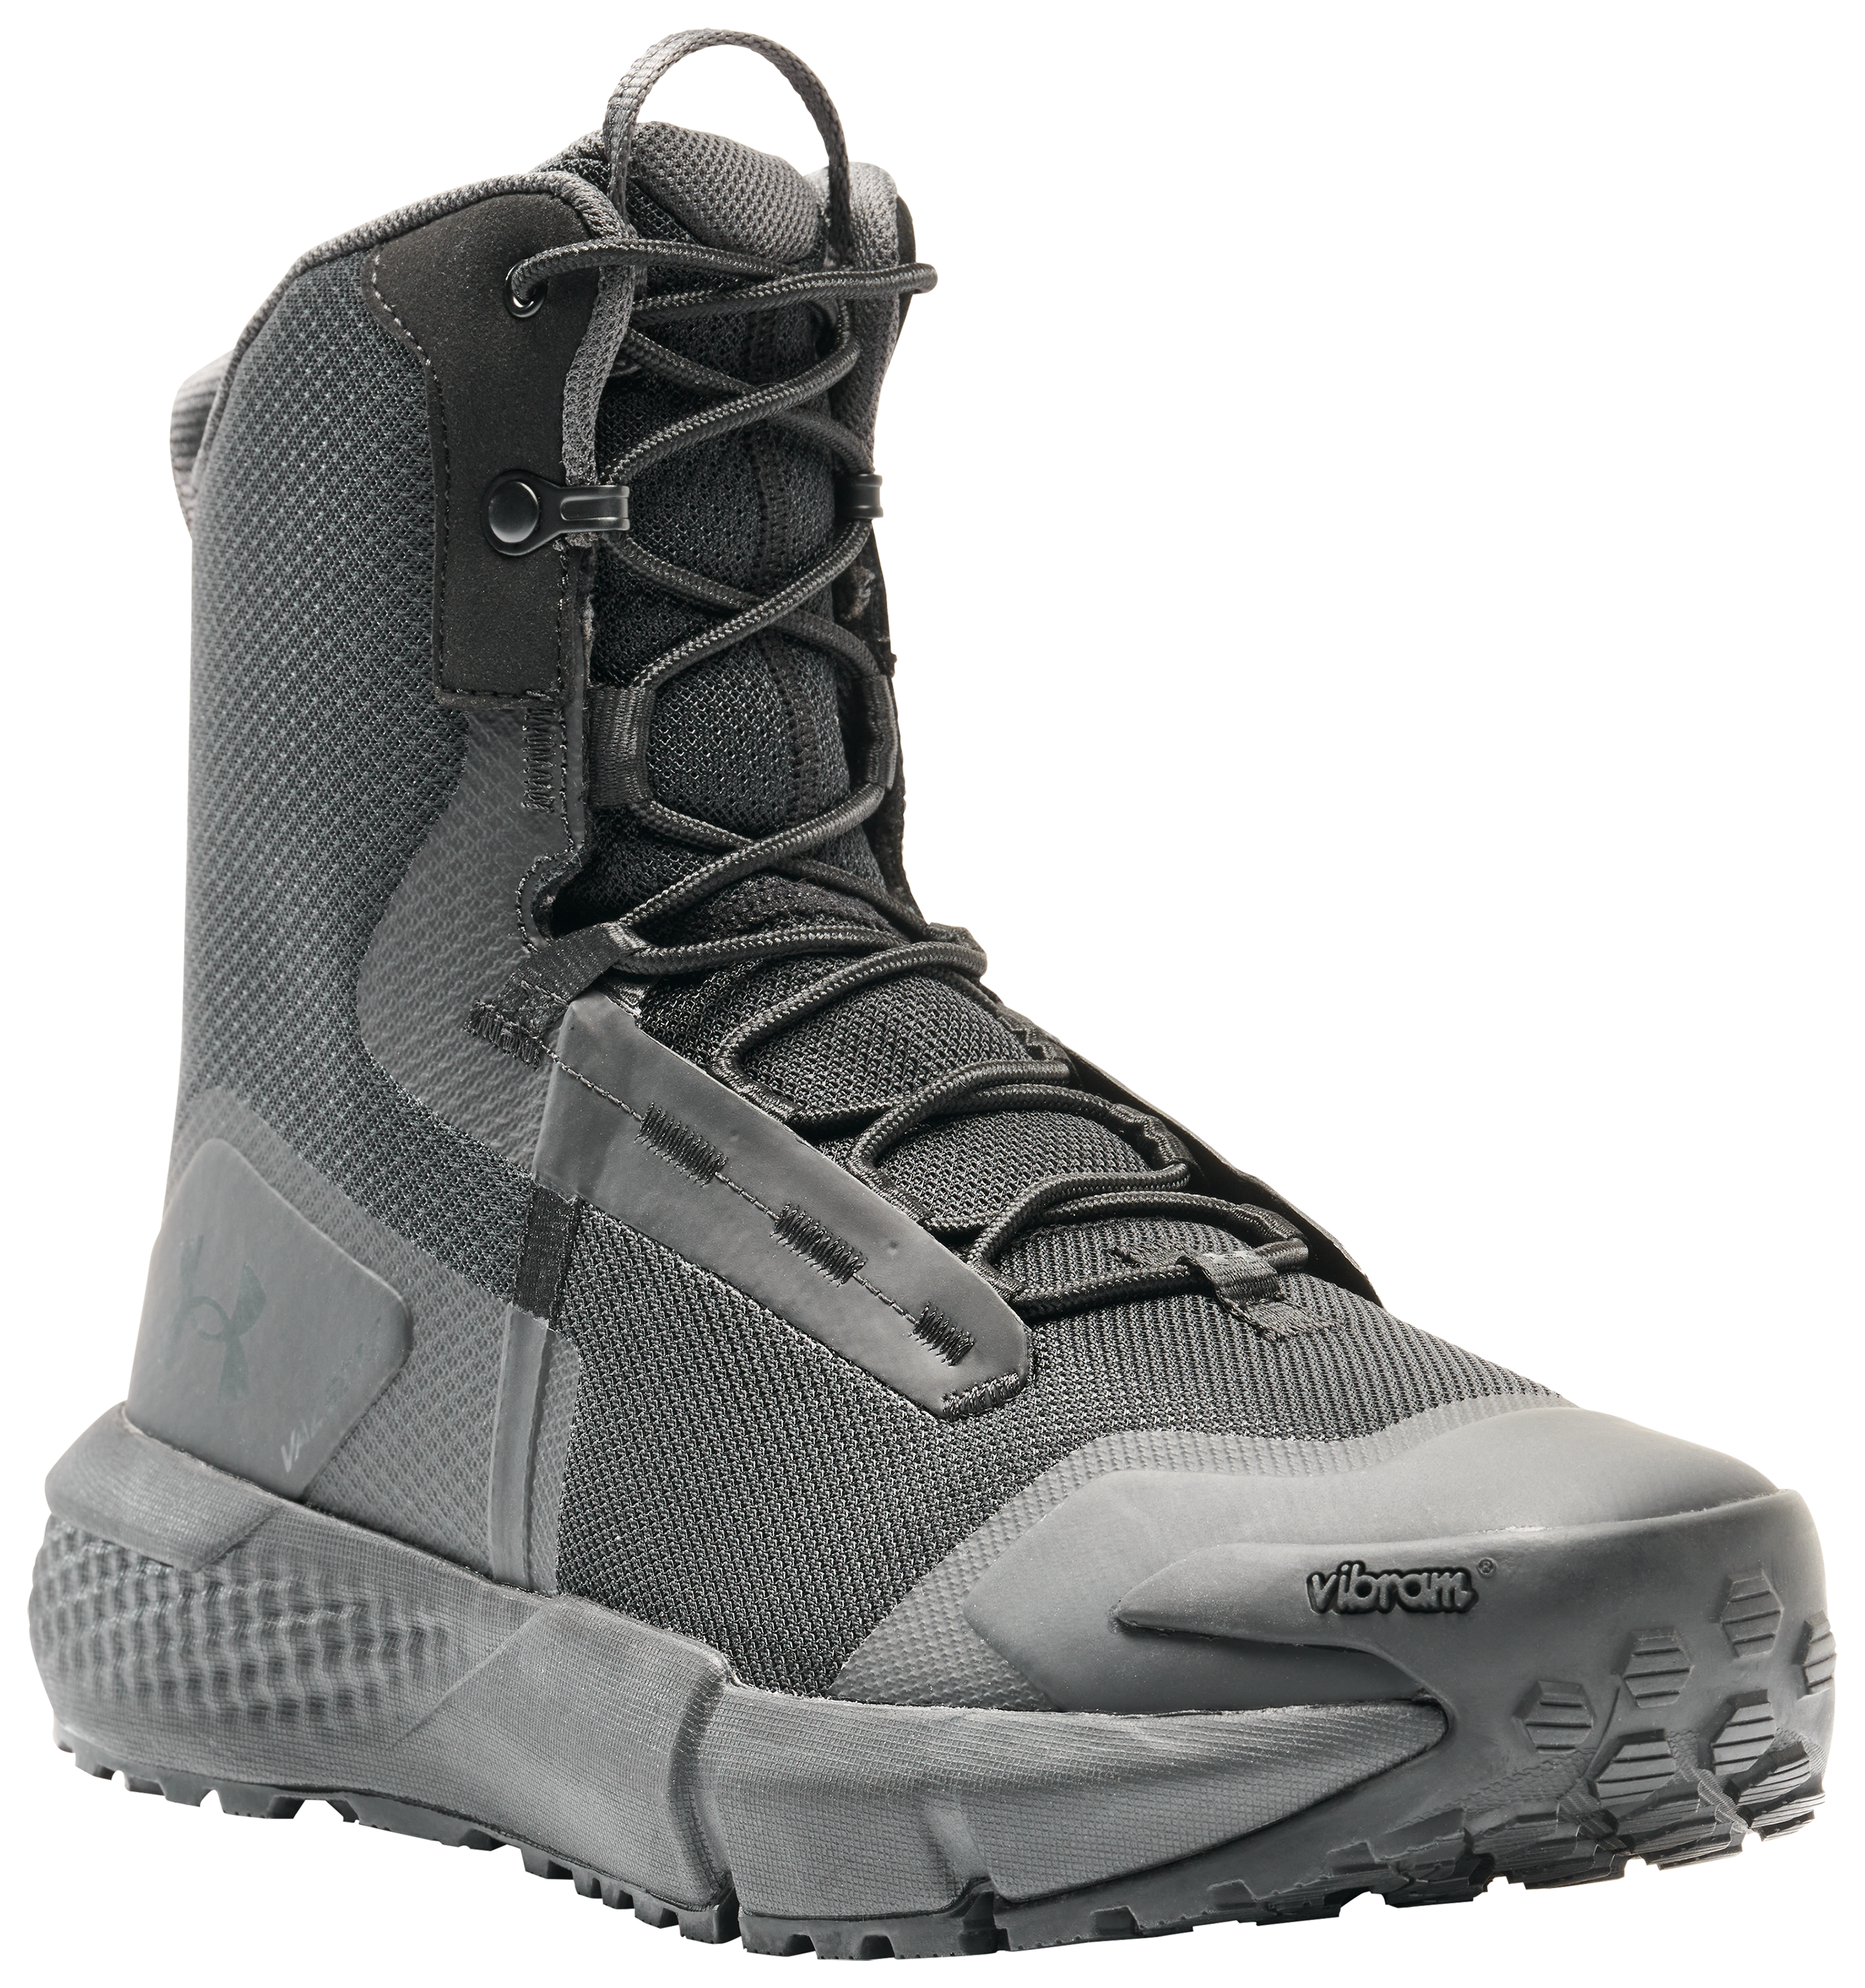 Under Armour Valsetz Side Zip Tactical Boots for Men - Black - 9M